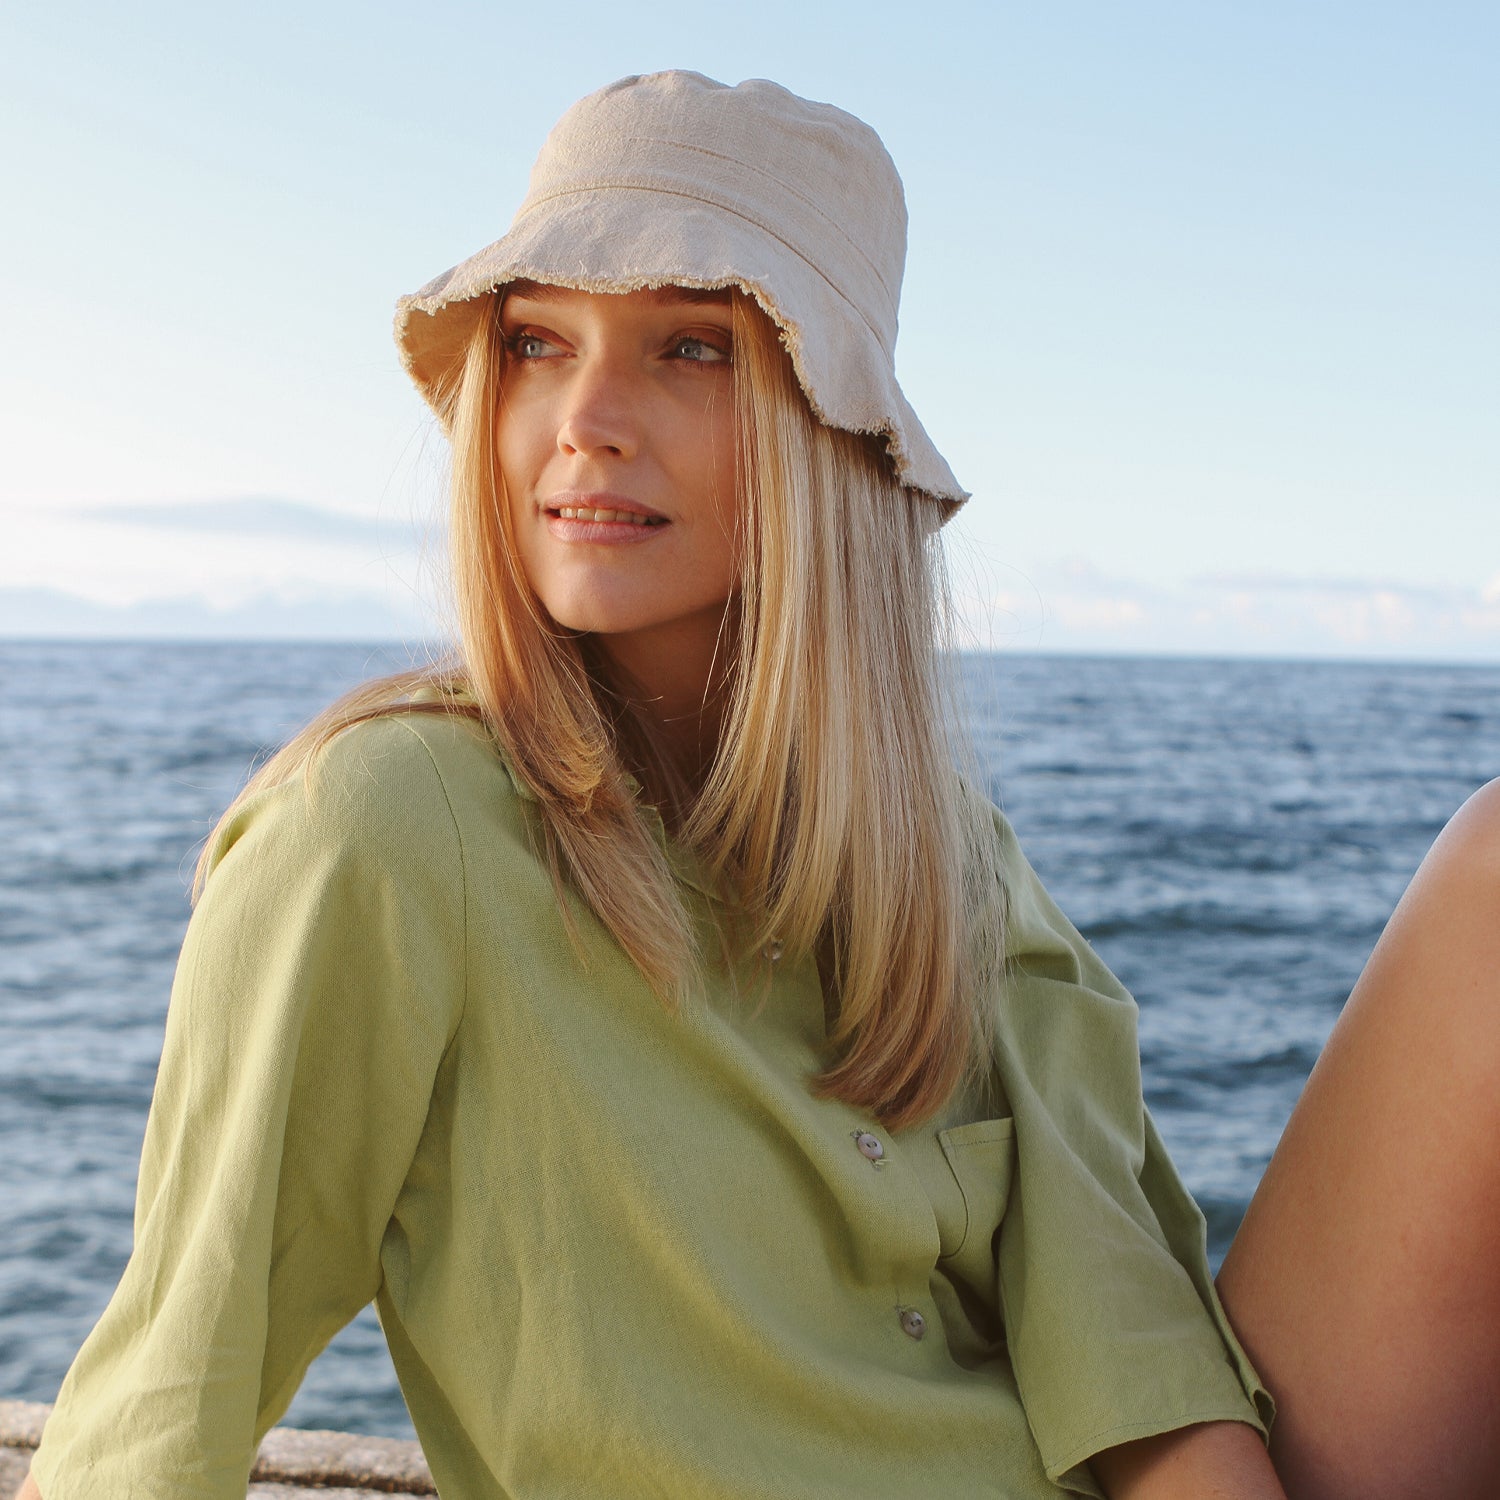 Nobrand Women Sun Hat Uv Protective Anti-Saliva Summer Cap Beach Hat With Face Shield Black